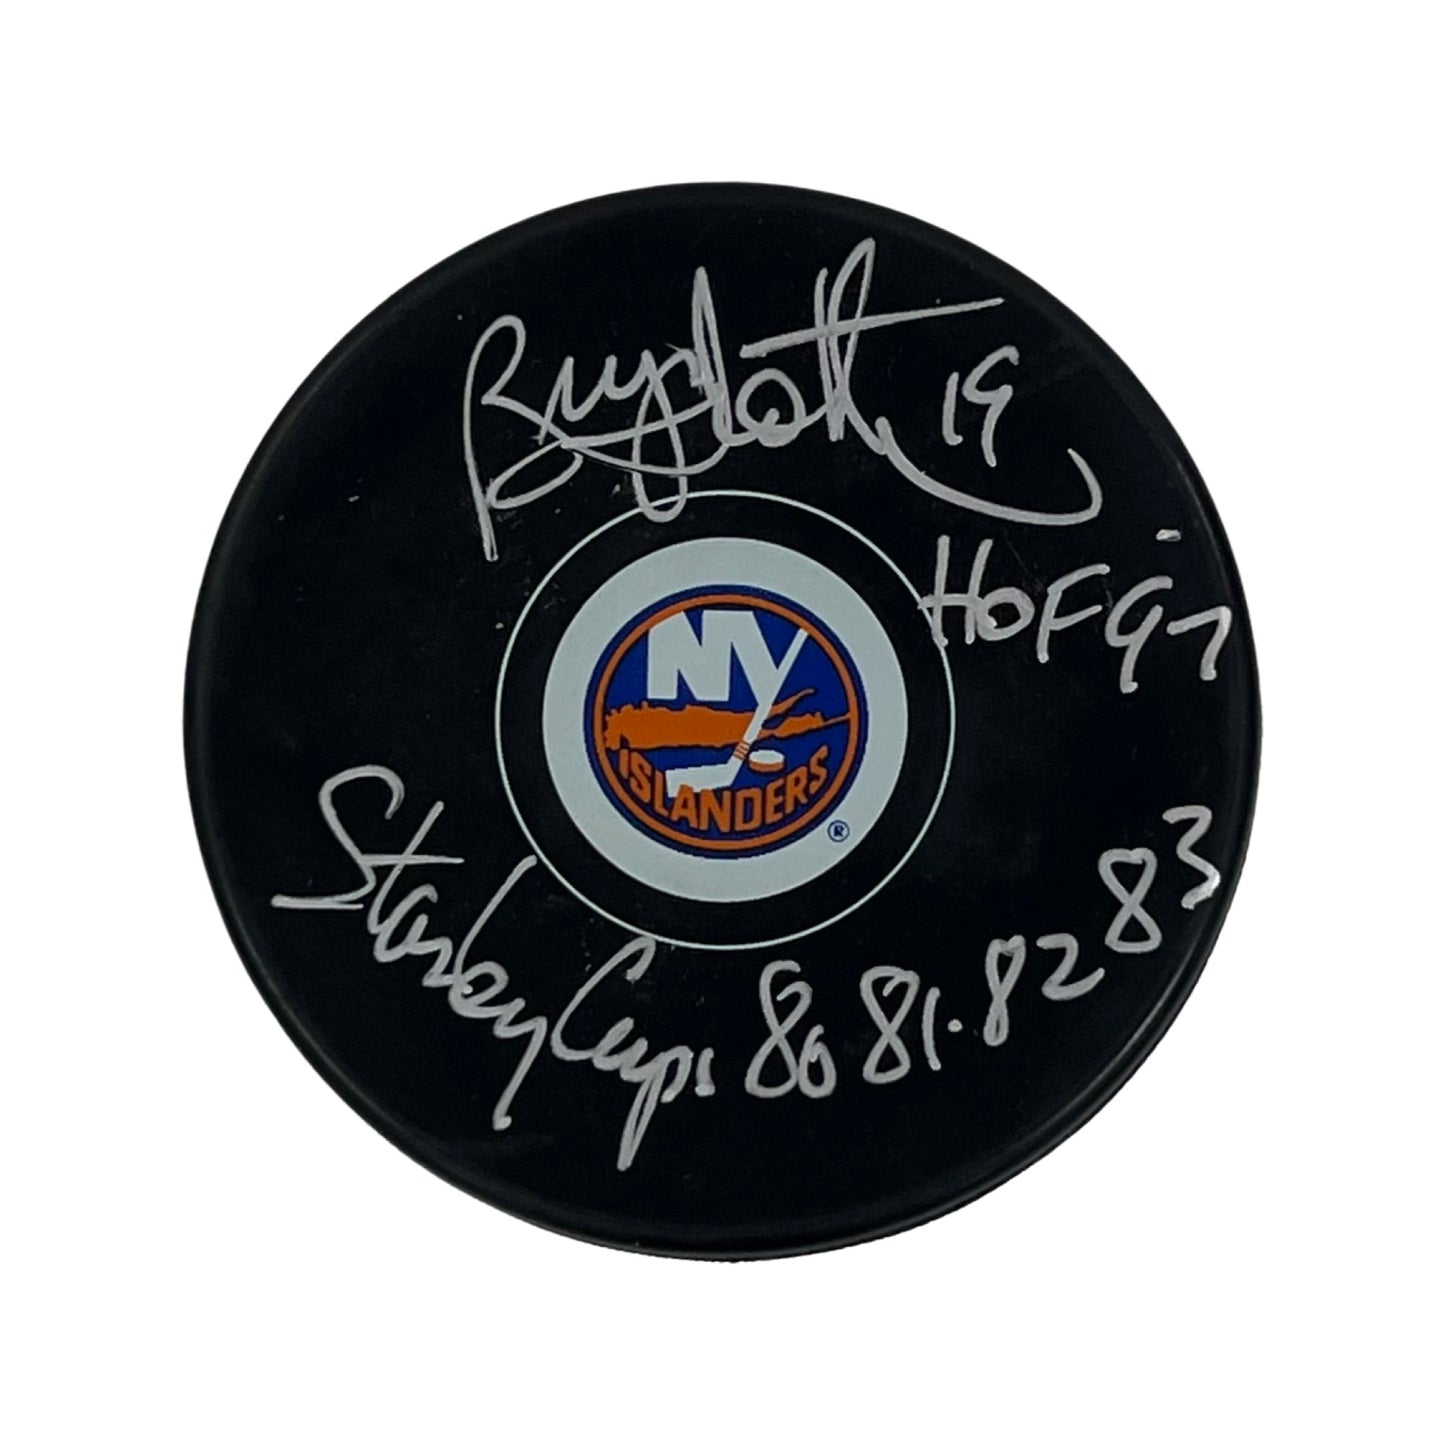 Bryan Trottier Autographed New York Islanders Replica Puck “HOF 97, Stanley Cups 80, 81, 82, 83” Inscriptions Steiner CX